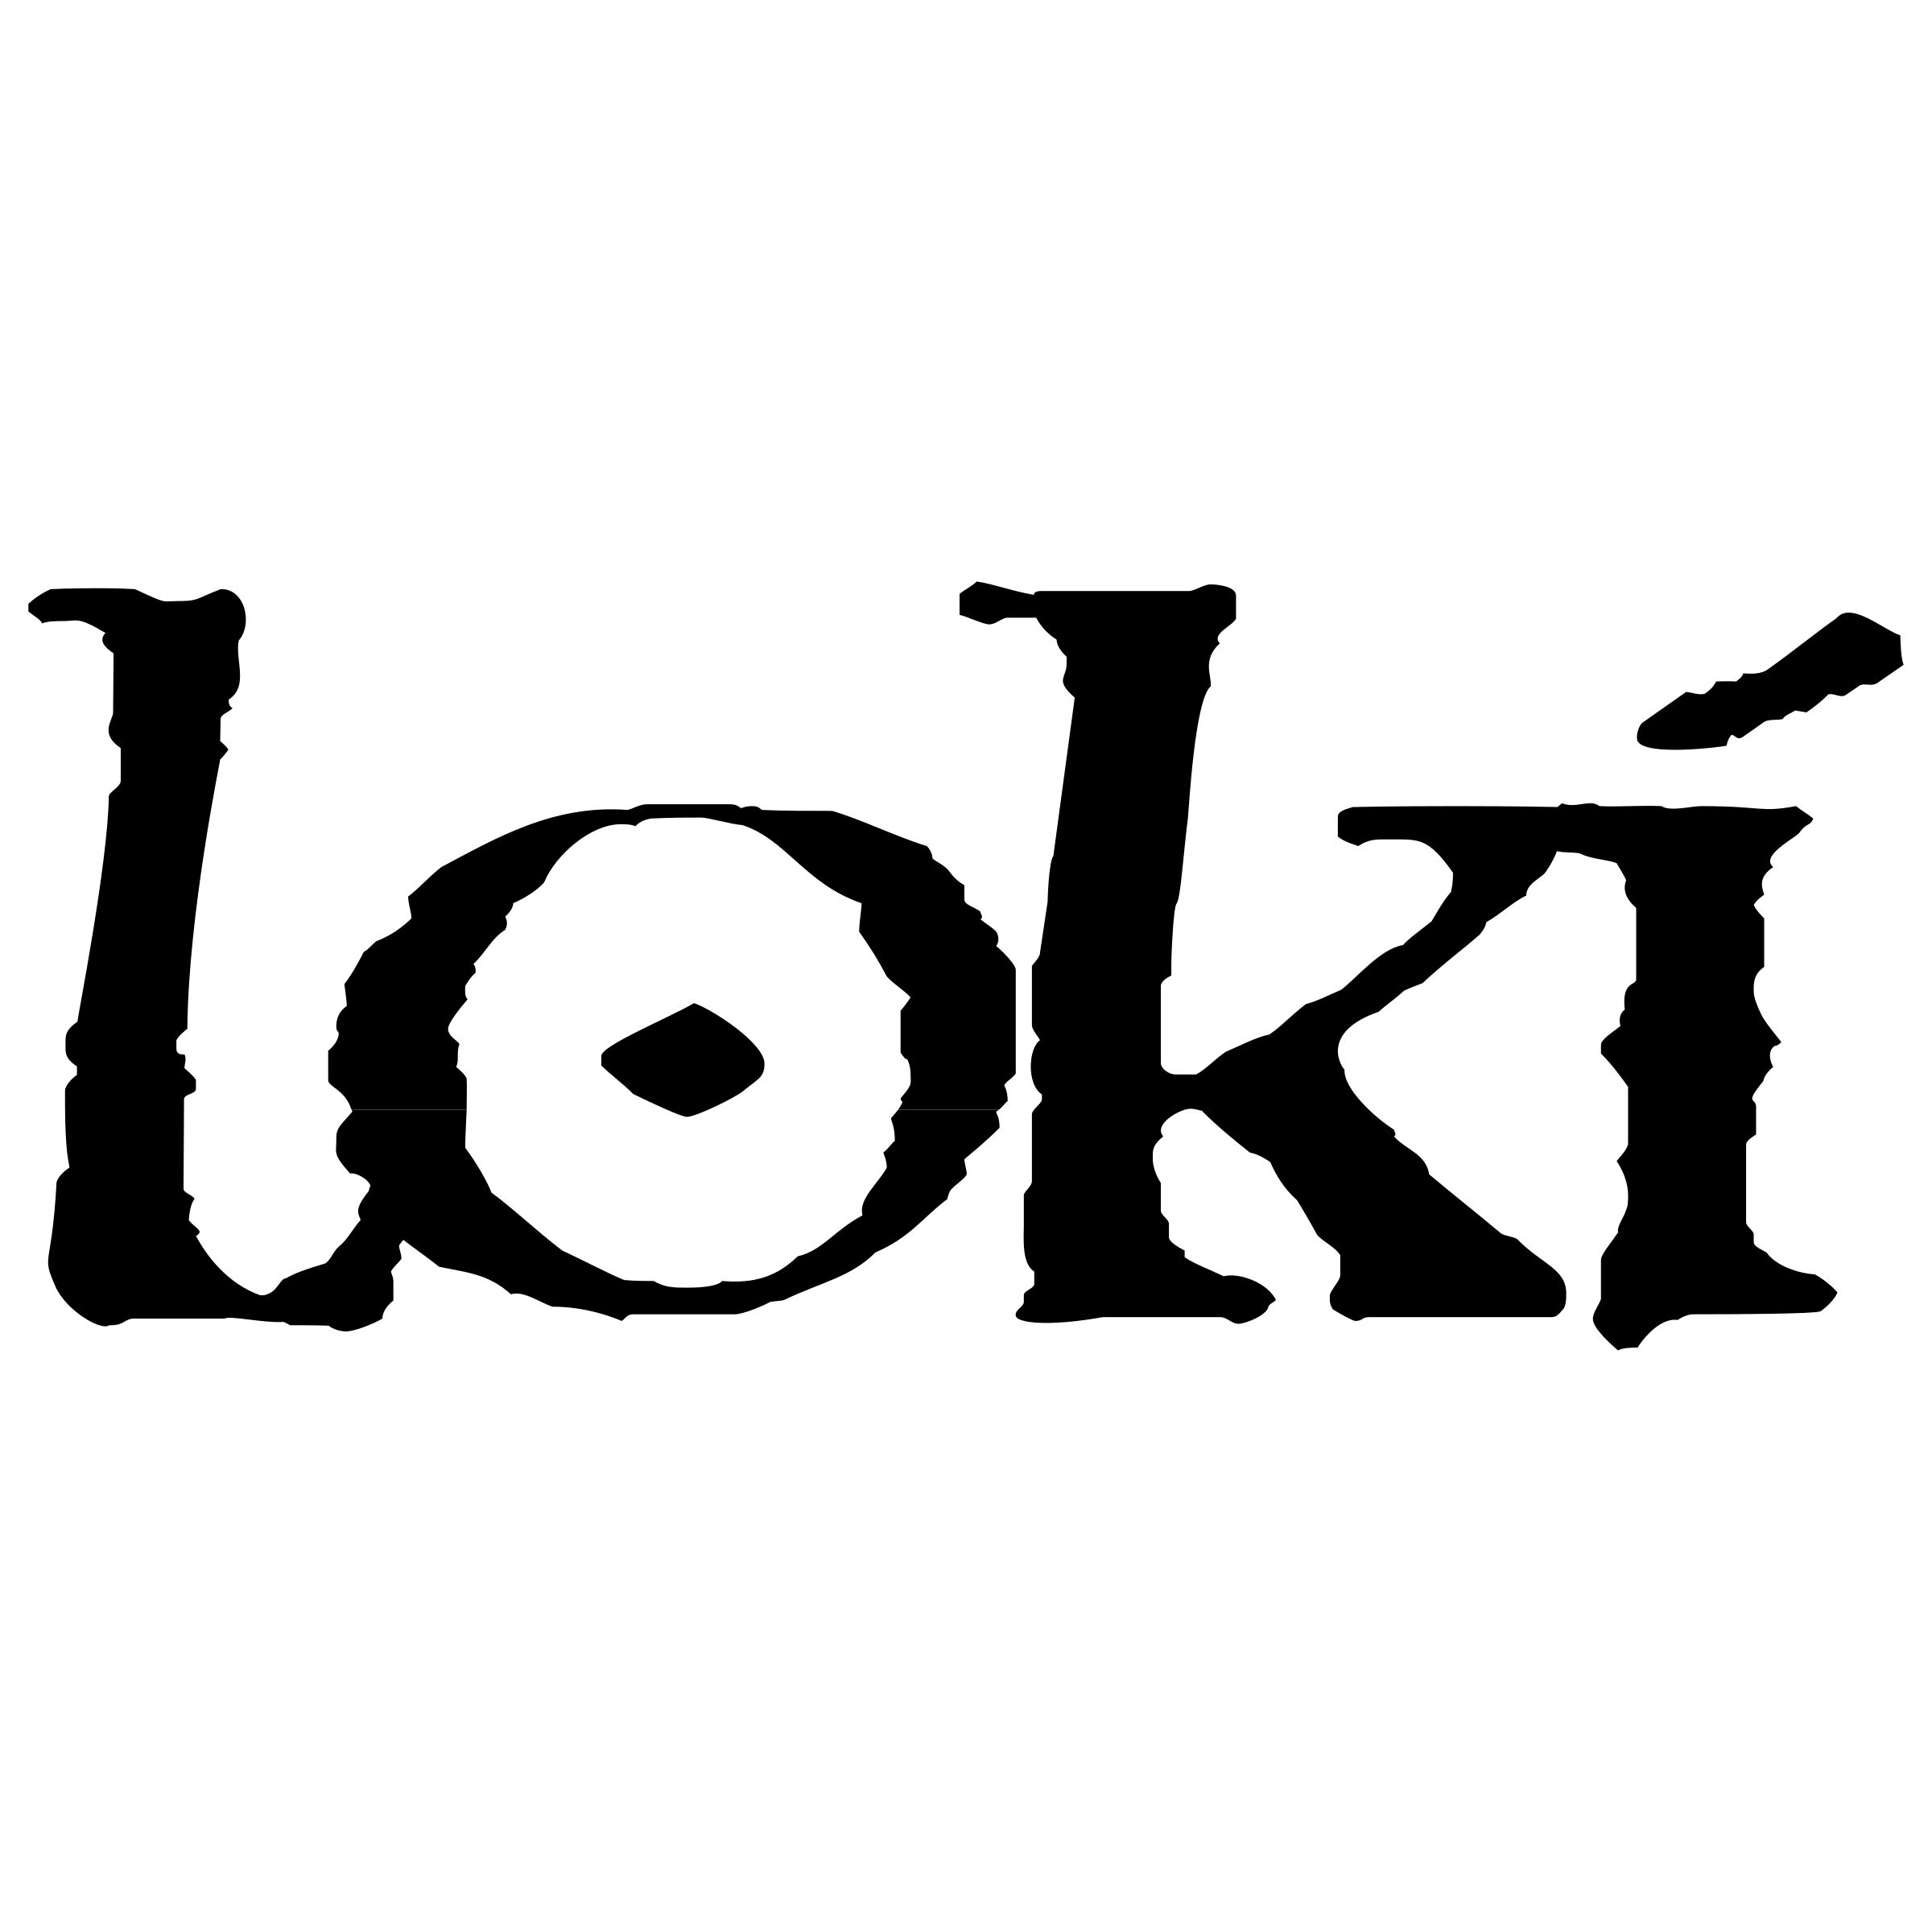 Black and White Loki Logo - Loki Logo PNG Transparent & SVG Vector